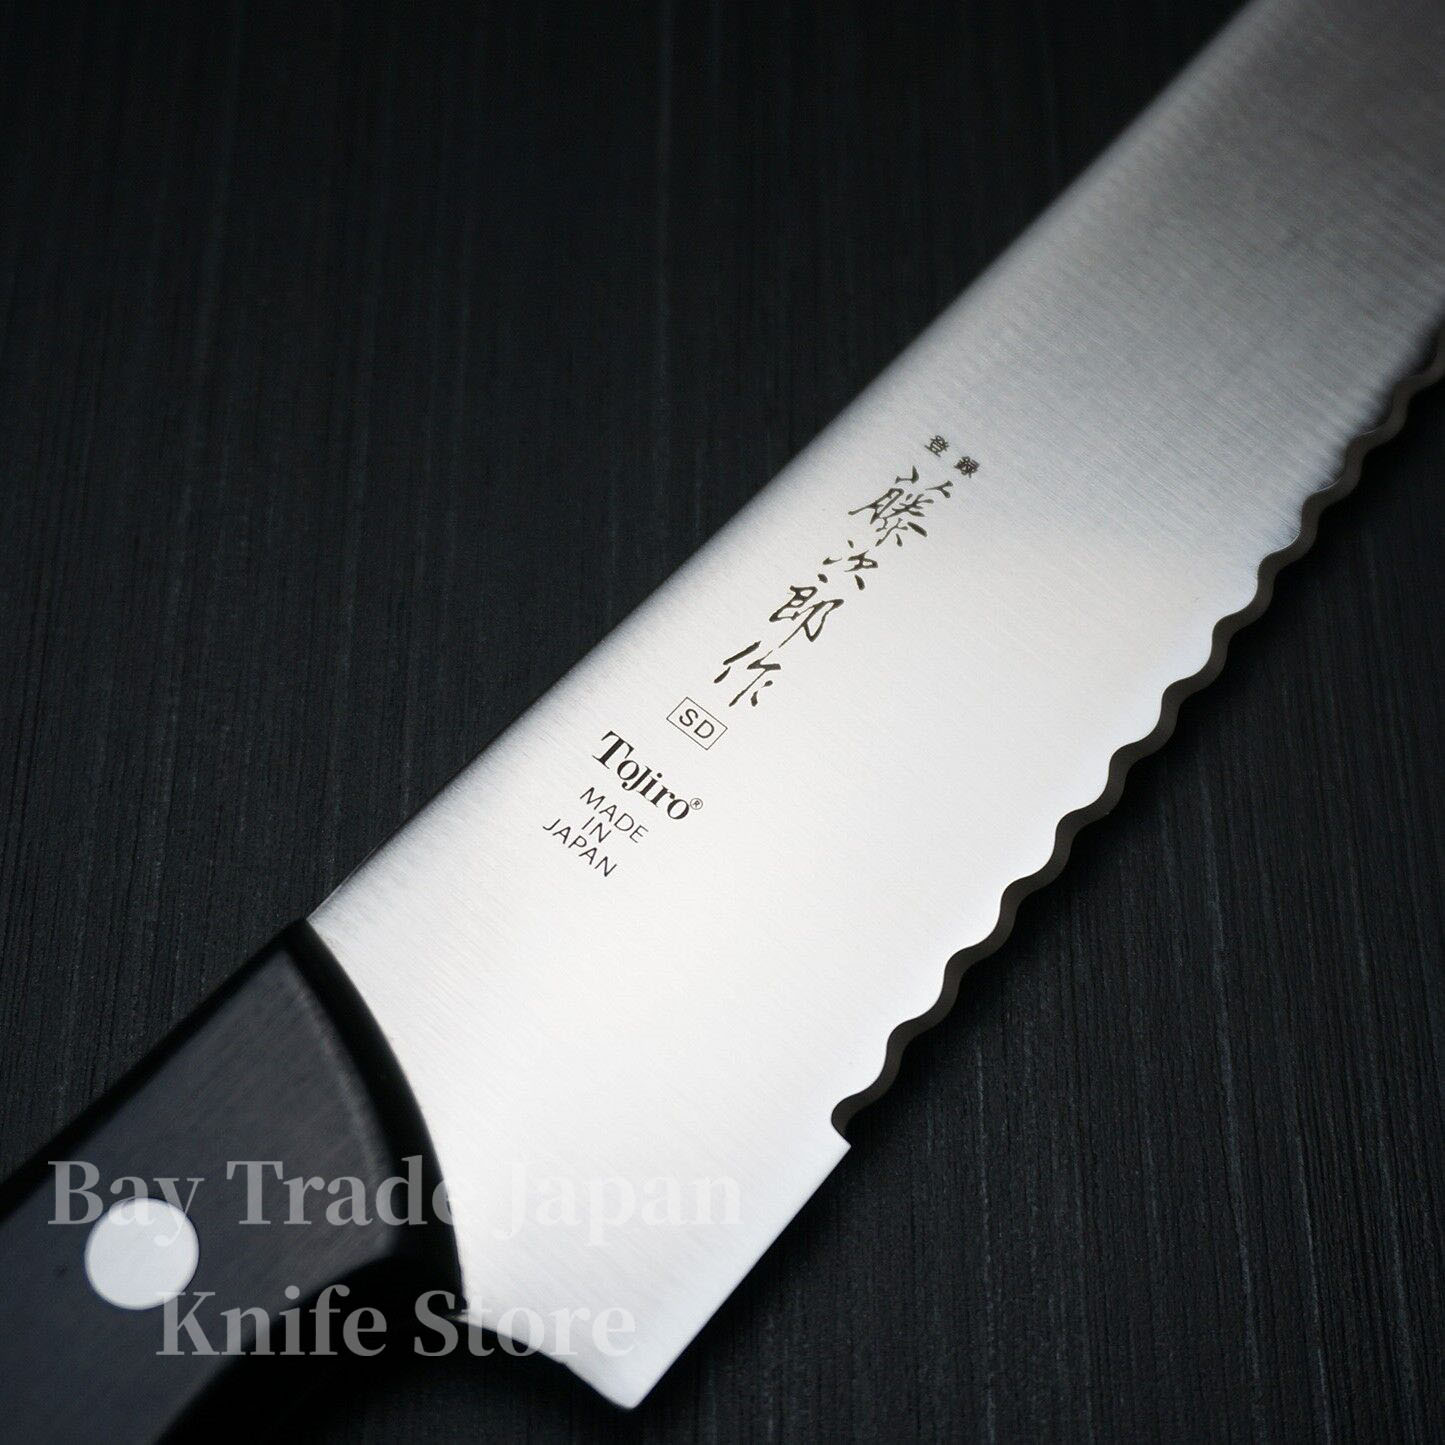 Tojiro Pan Slicer 215mm Made in Japan F-629